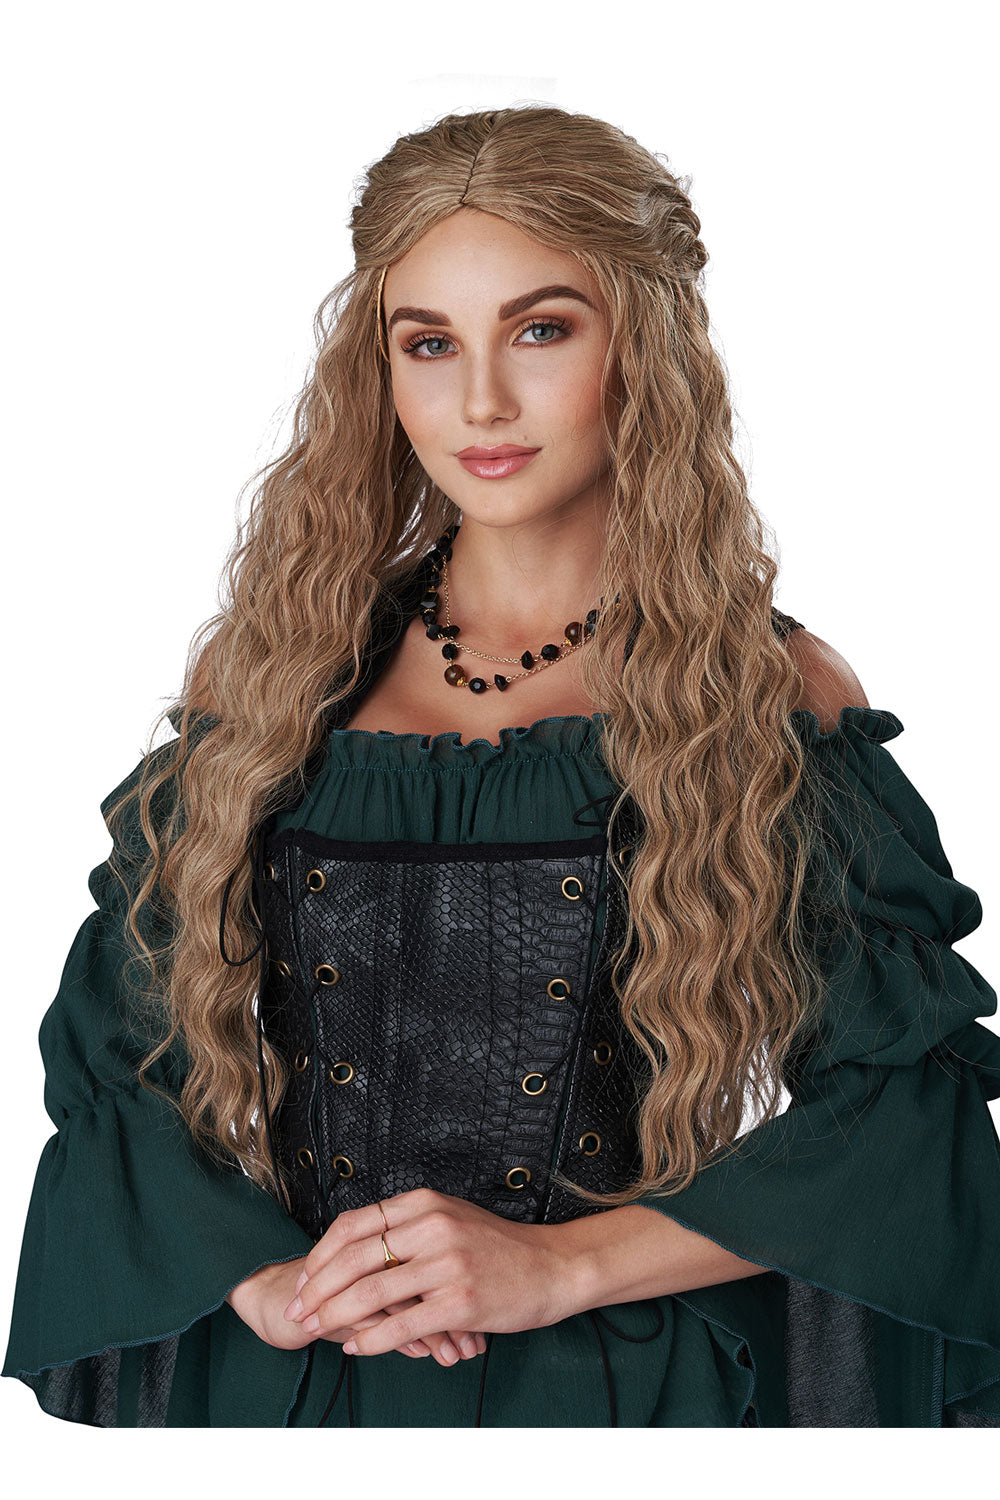 Renaissance Maiden Wig California Costume 7020/046